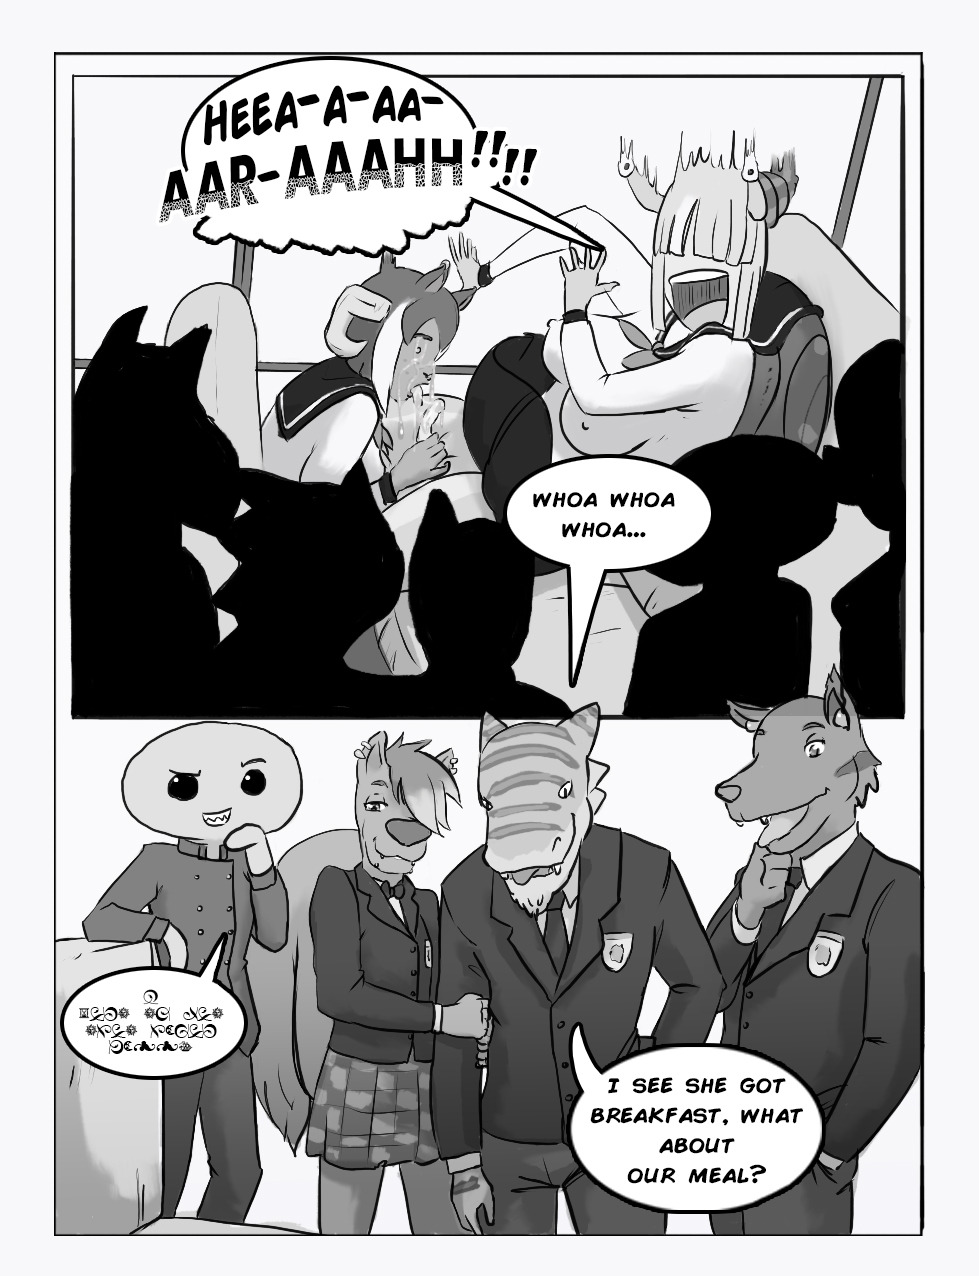 channeldulce: Dulce Comic update Chapter 1 “Bust Ride” pg 12 - 14 More cumming